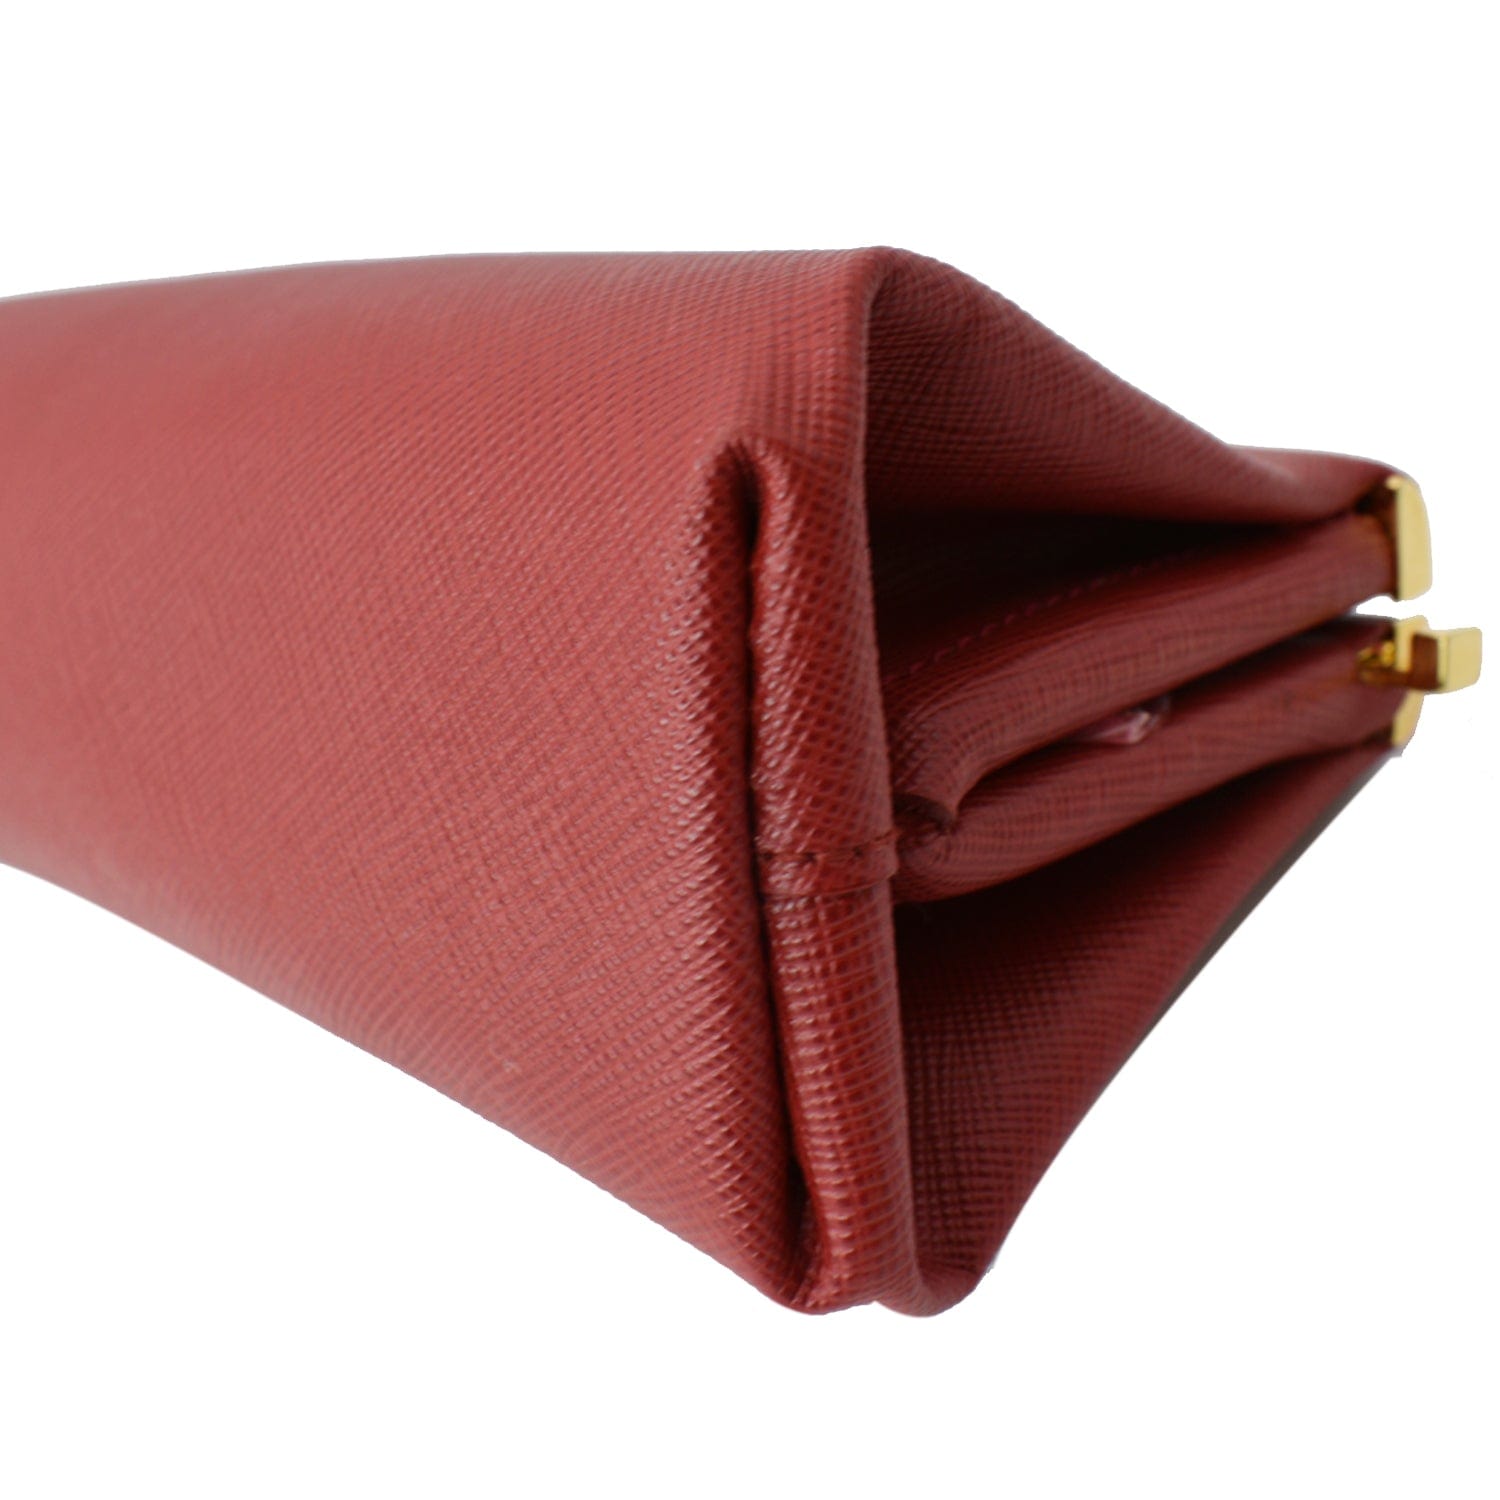 Prada - Saffiano Leather Lock Clutch Red